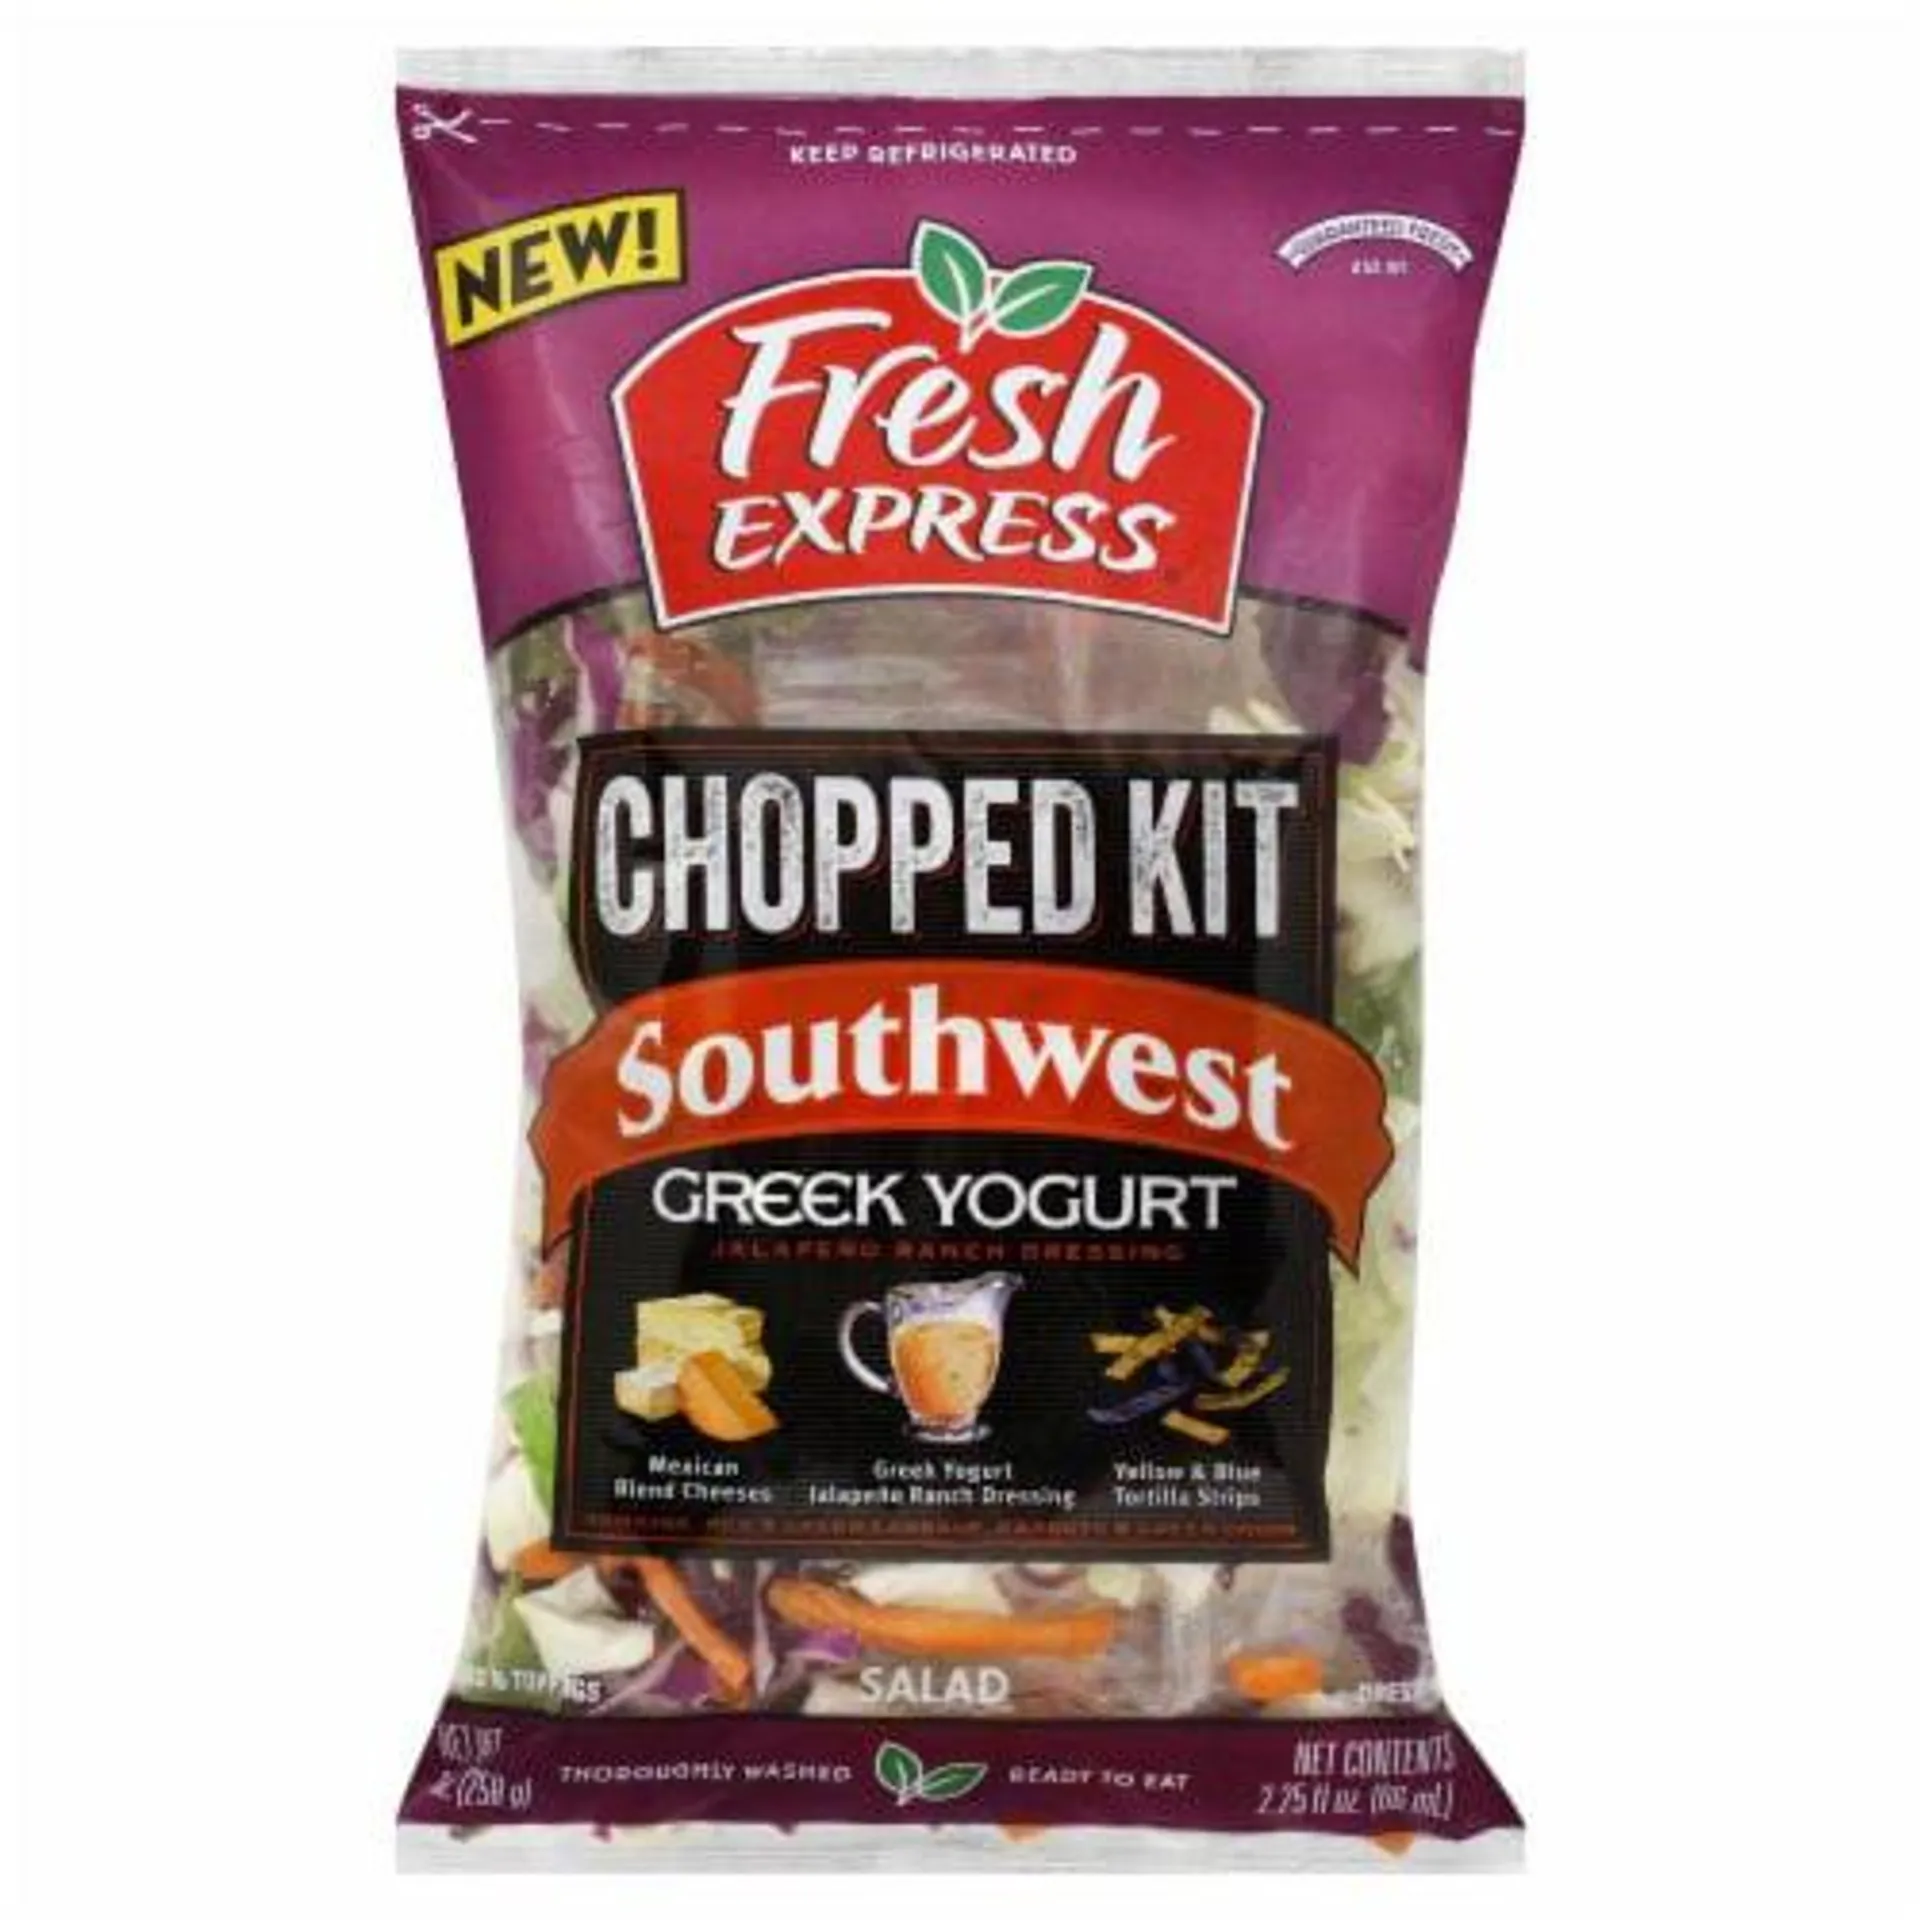 Fresh Express Southwest Greek Yogurt Chopped Kit Salad